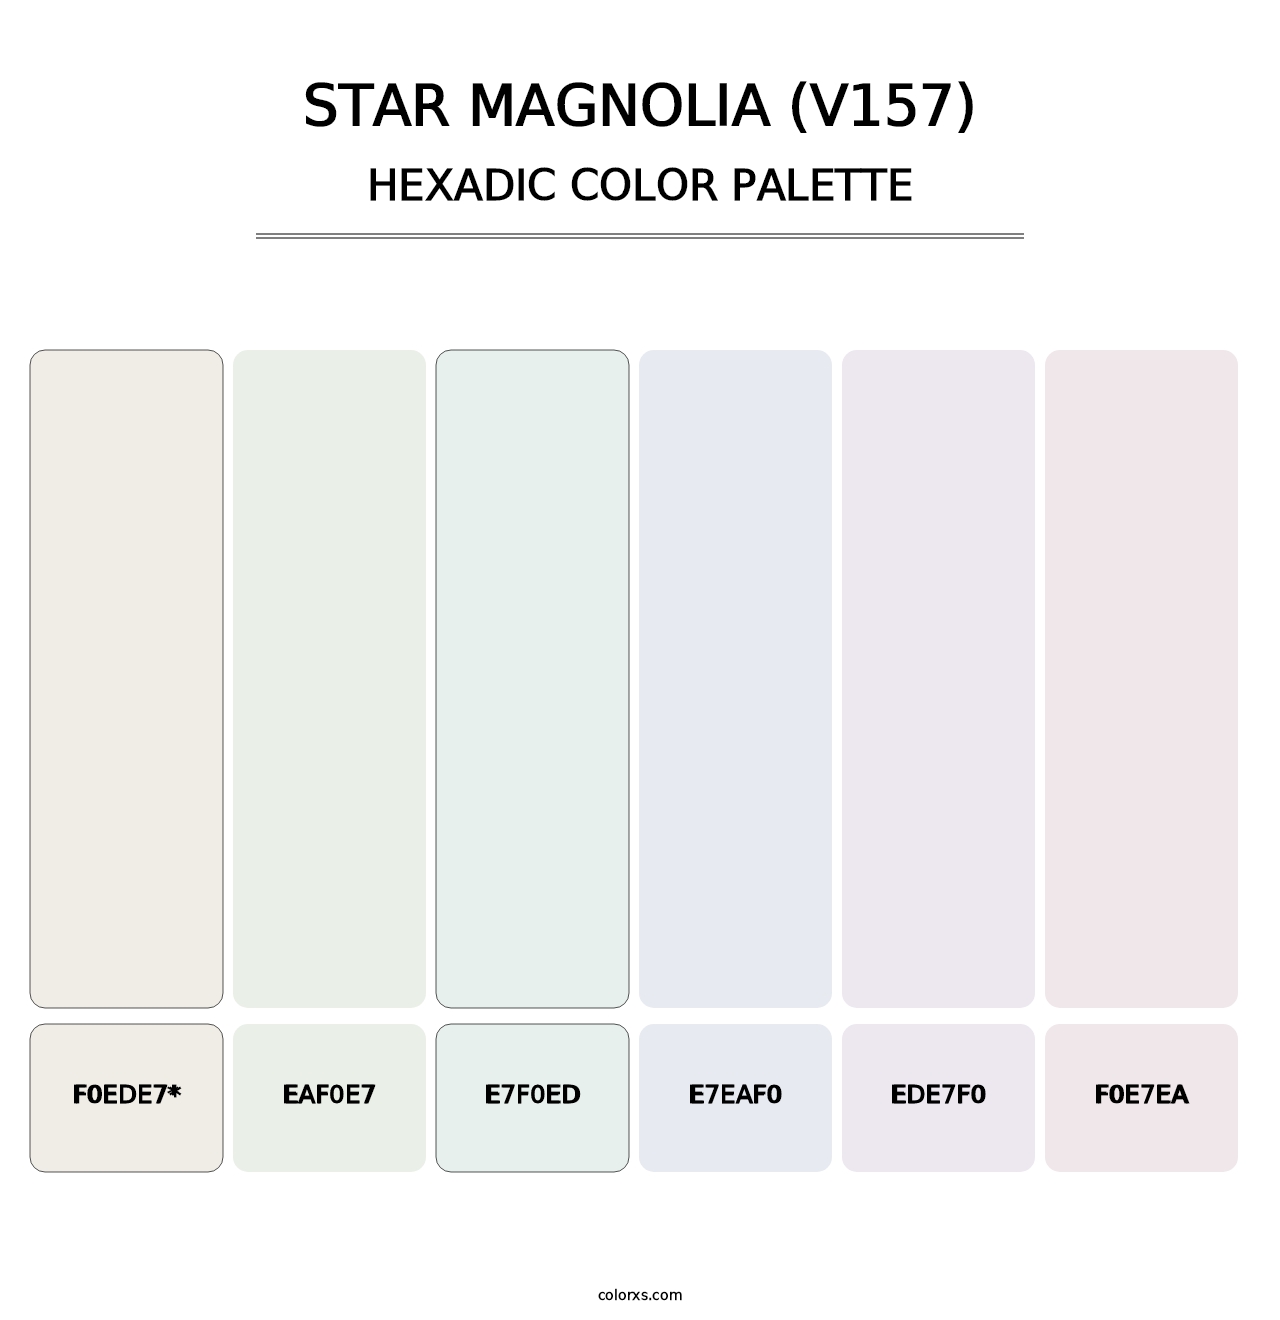 Star Magnolia (V157) - Hexadic Color Palette